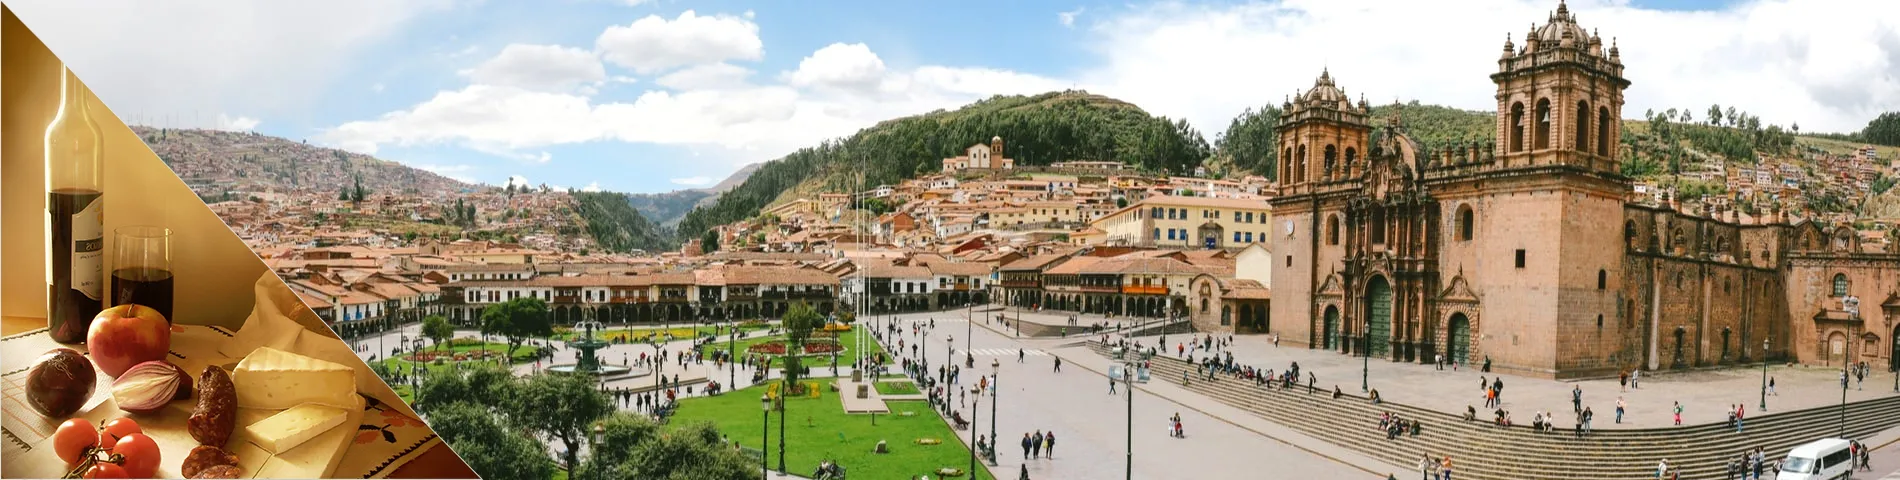 Cuzco - Spagnolo & Cultura